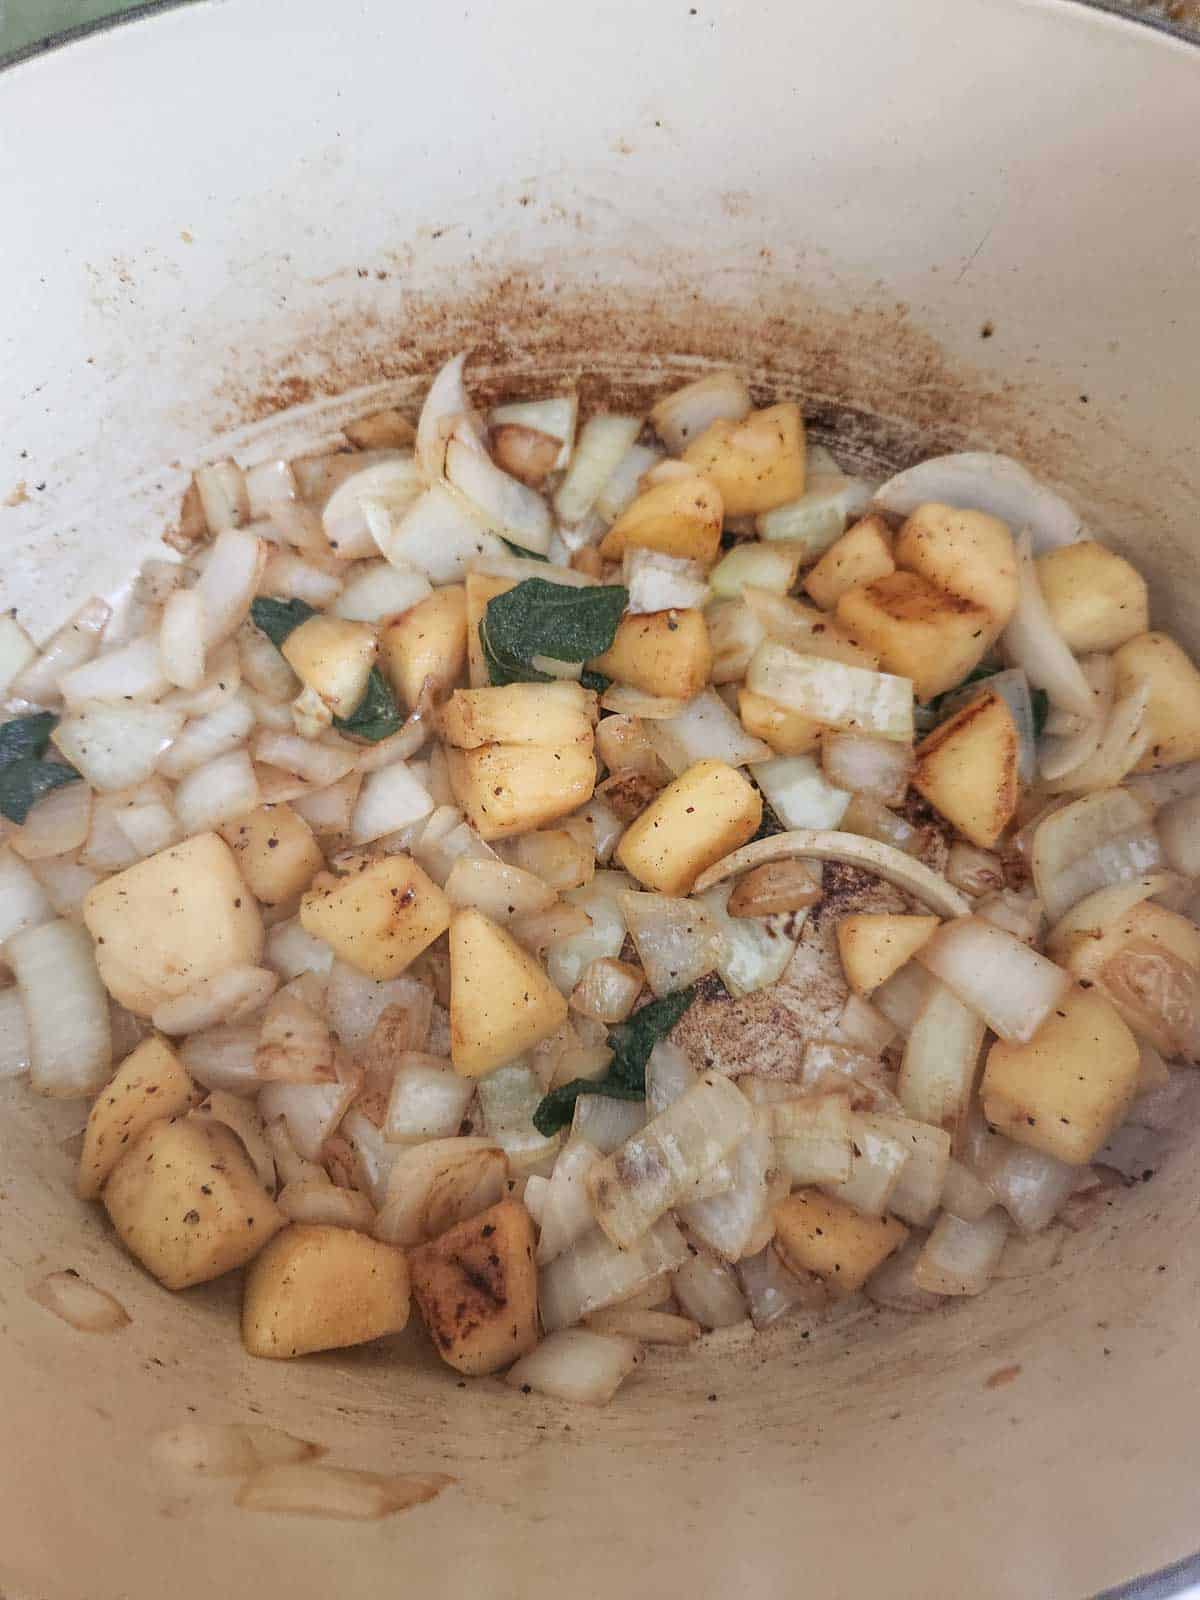 Sautéed vegetables in a pot for soup.